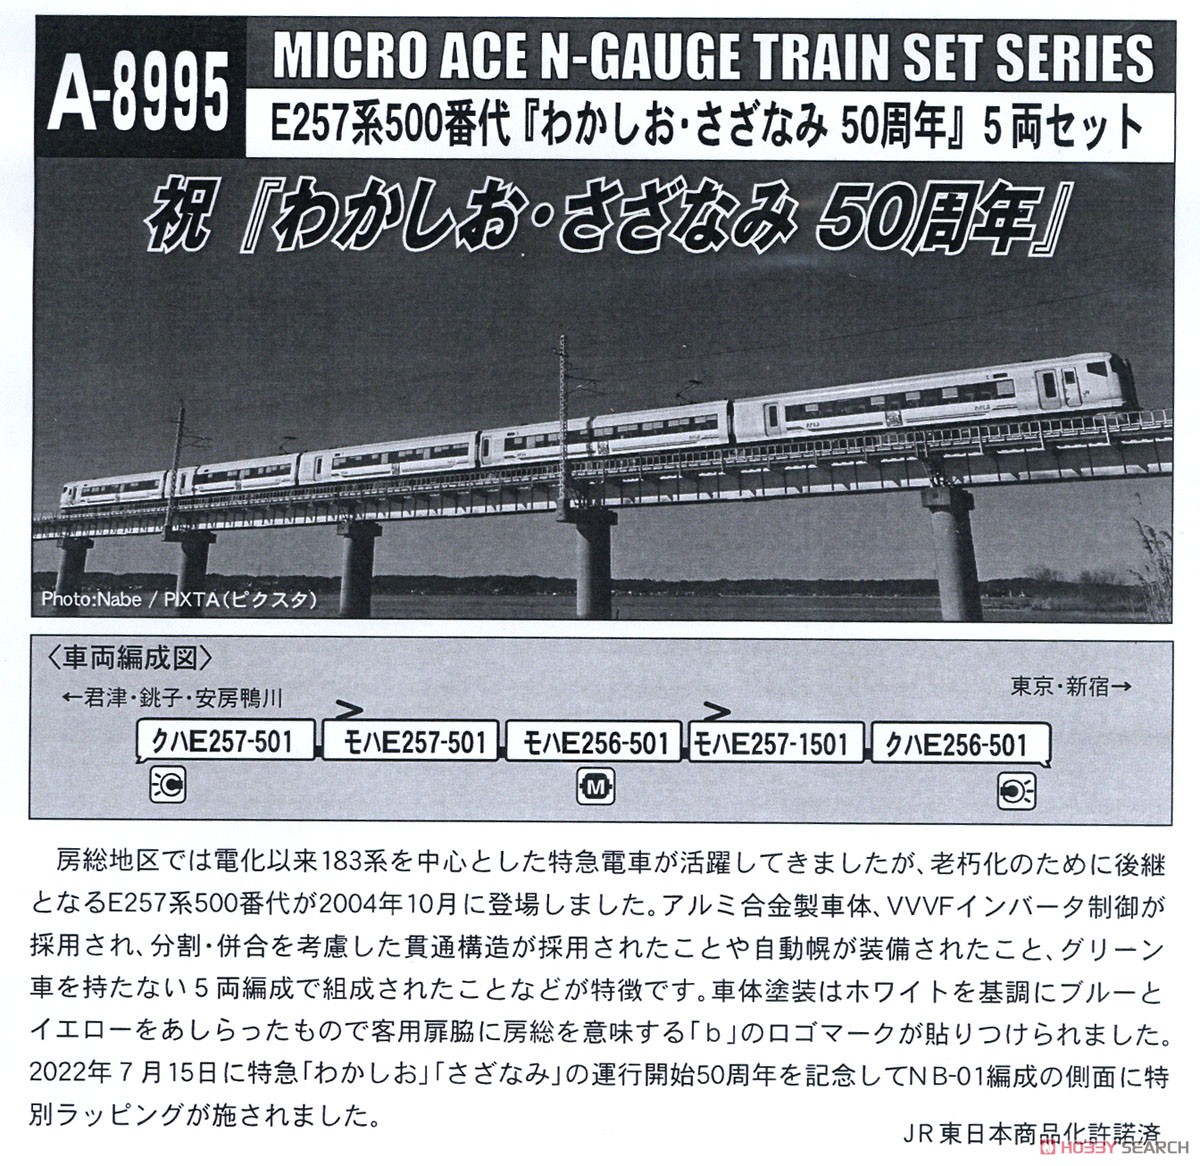 Series E257-500 `Wakashio, Sazanami 50th Anniversary` Five Car Set (5-Car Set) (Model Train) About item2